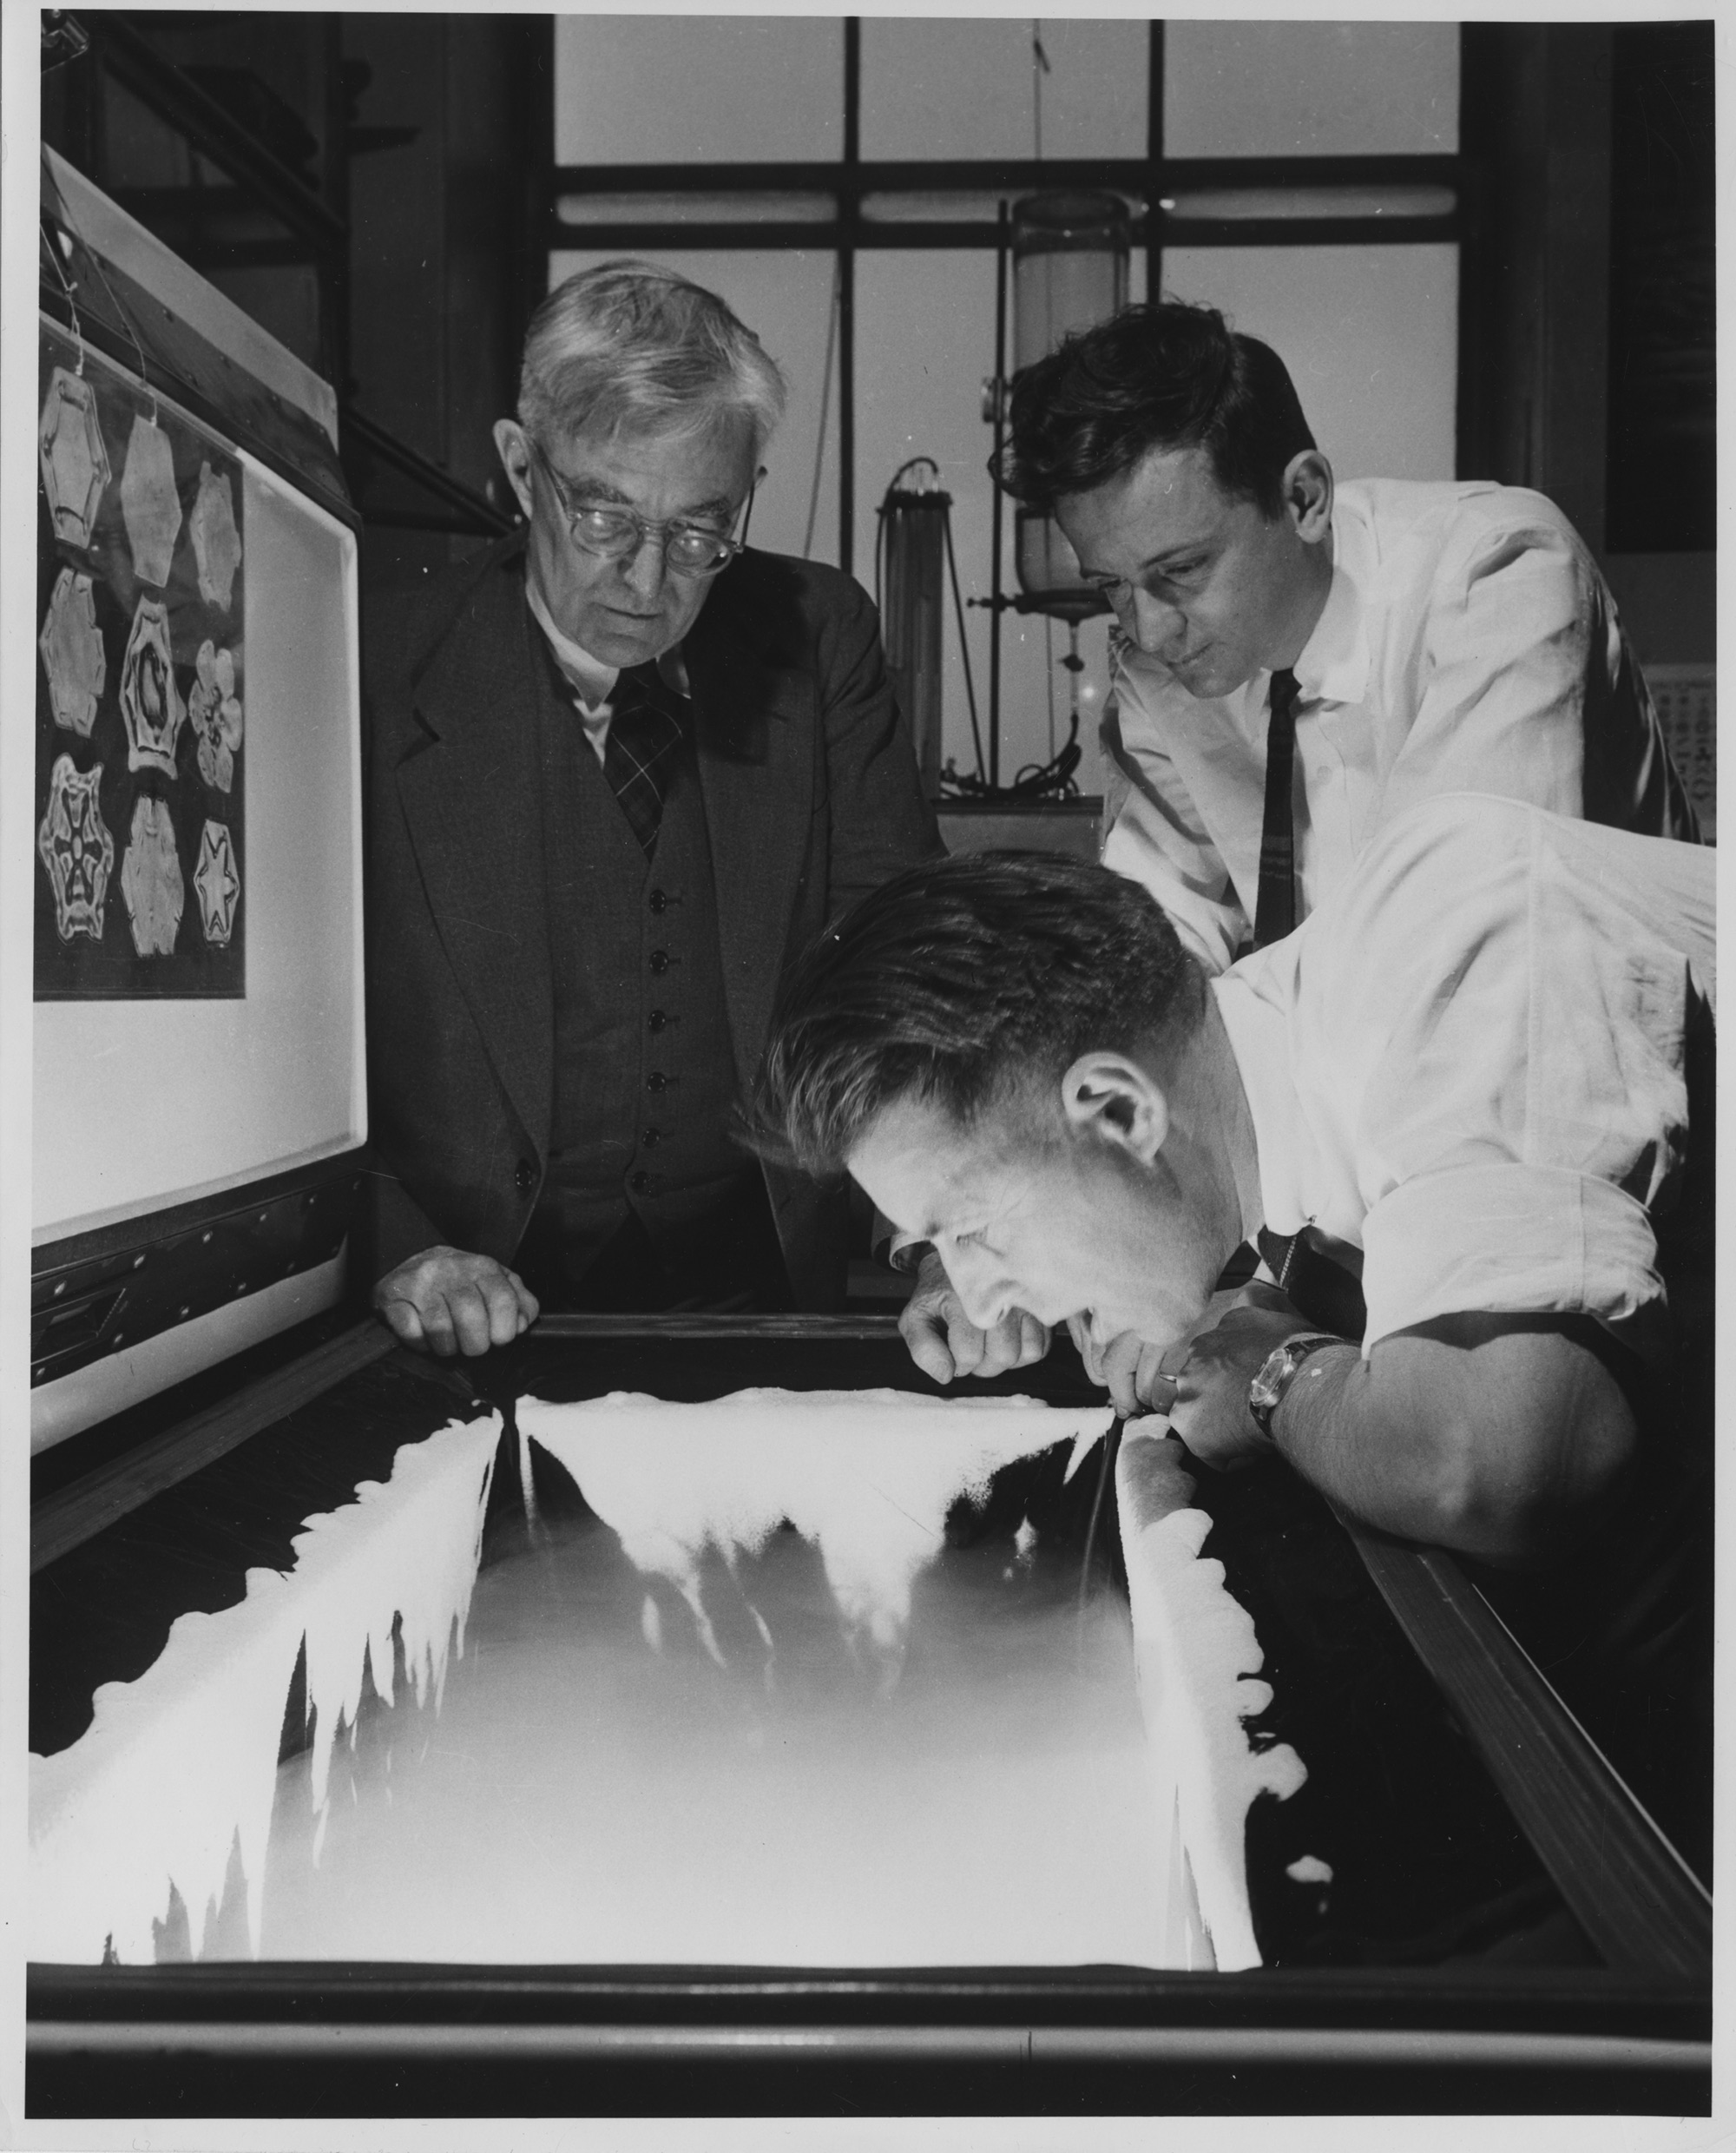 GE scientist Vincent Schaefer breathes a cloud into a freezer as colleagues Irving Langmuir and Bernard Vonnegut look on.